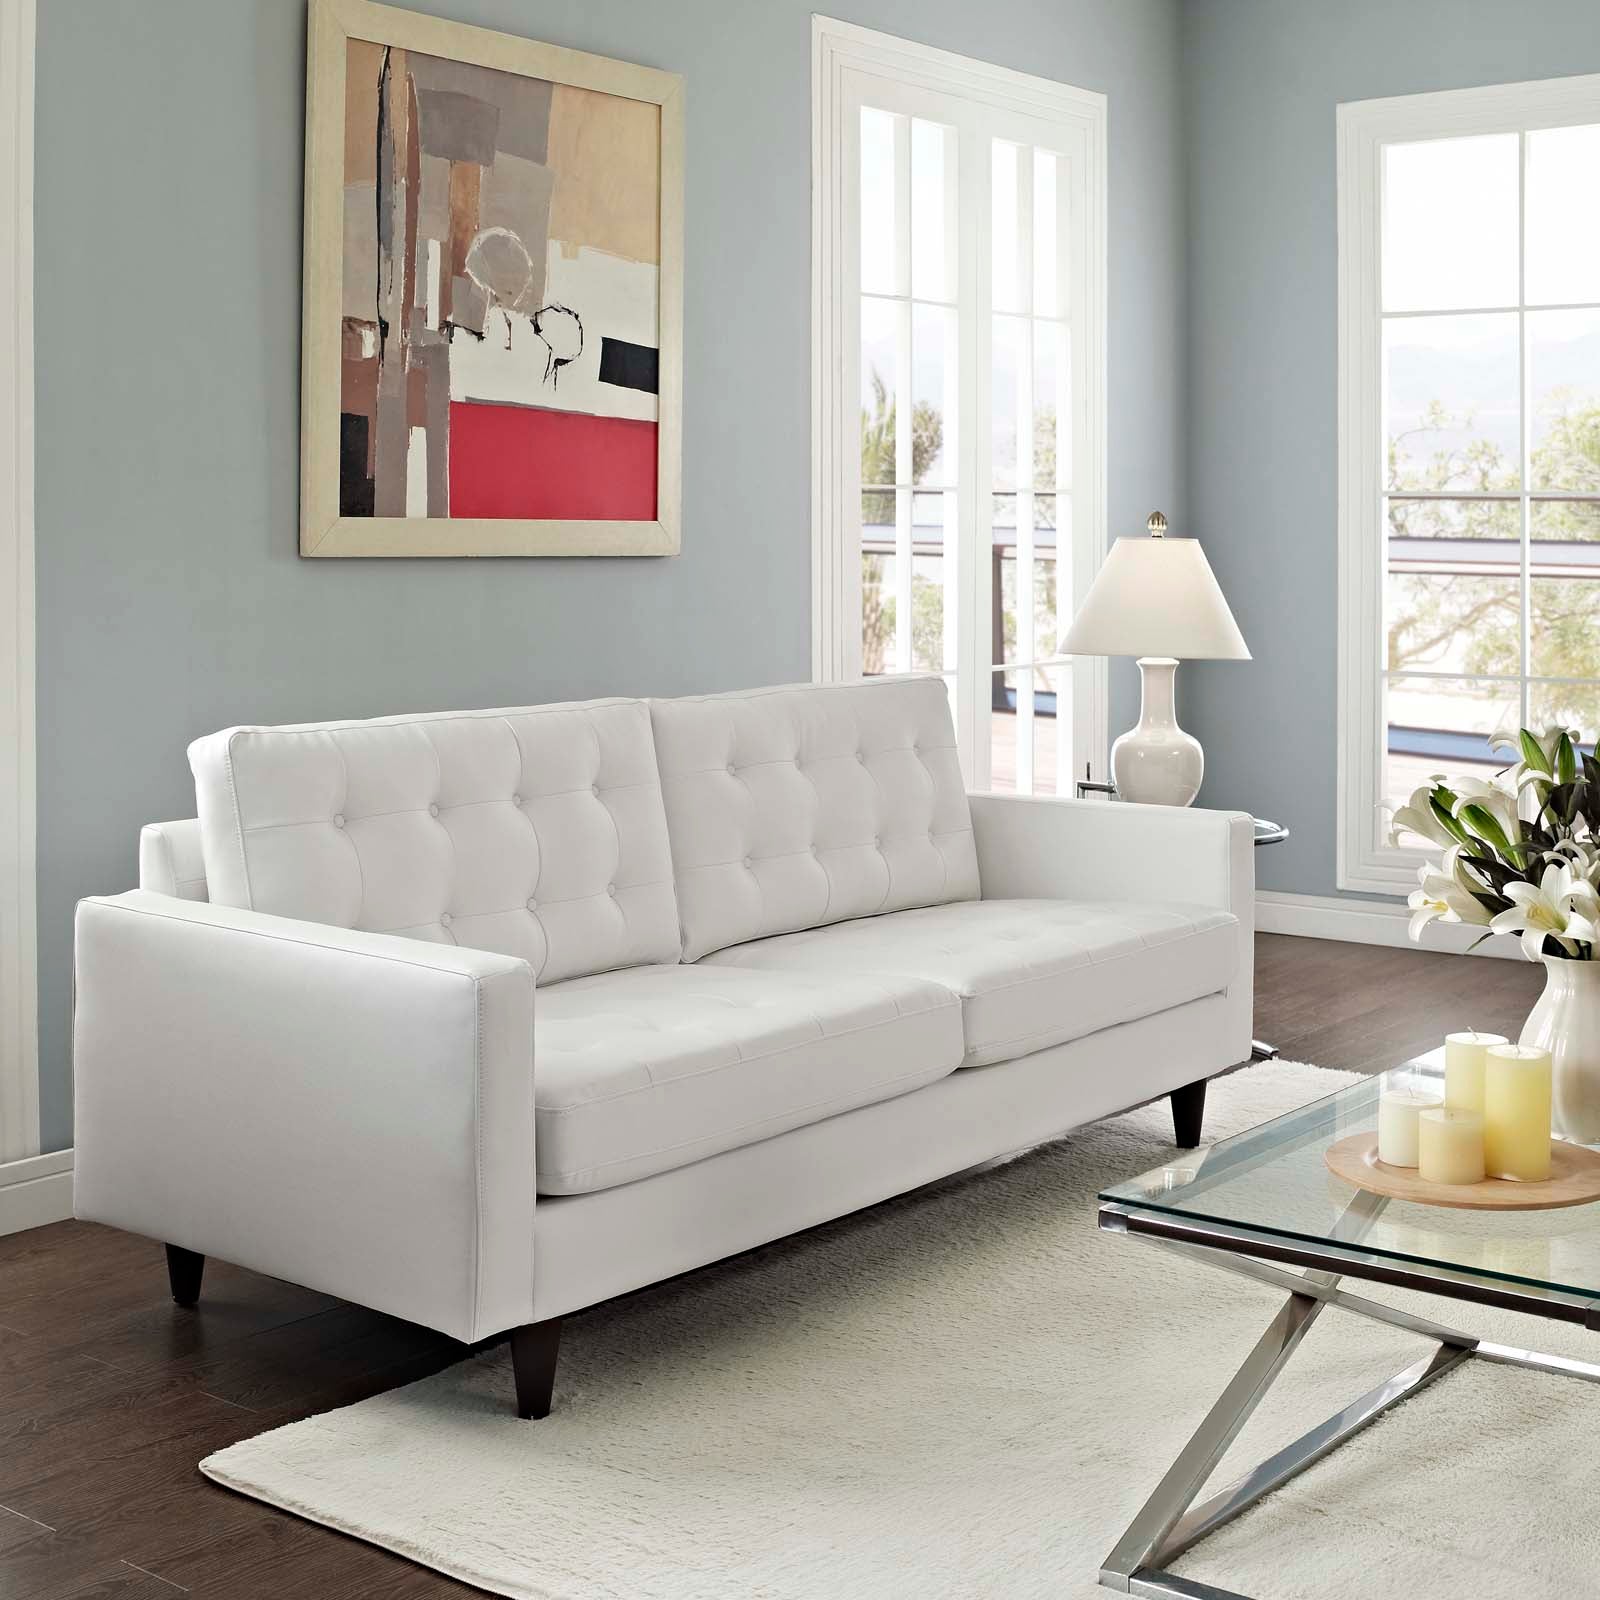 Empress Bonded Leather Sofa - East Shore Modern Home Furnishings